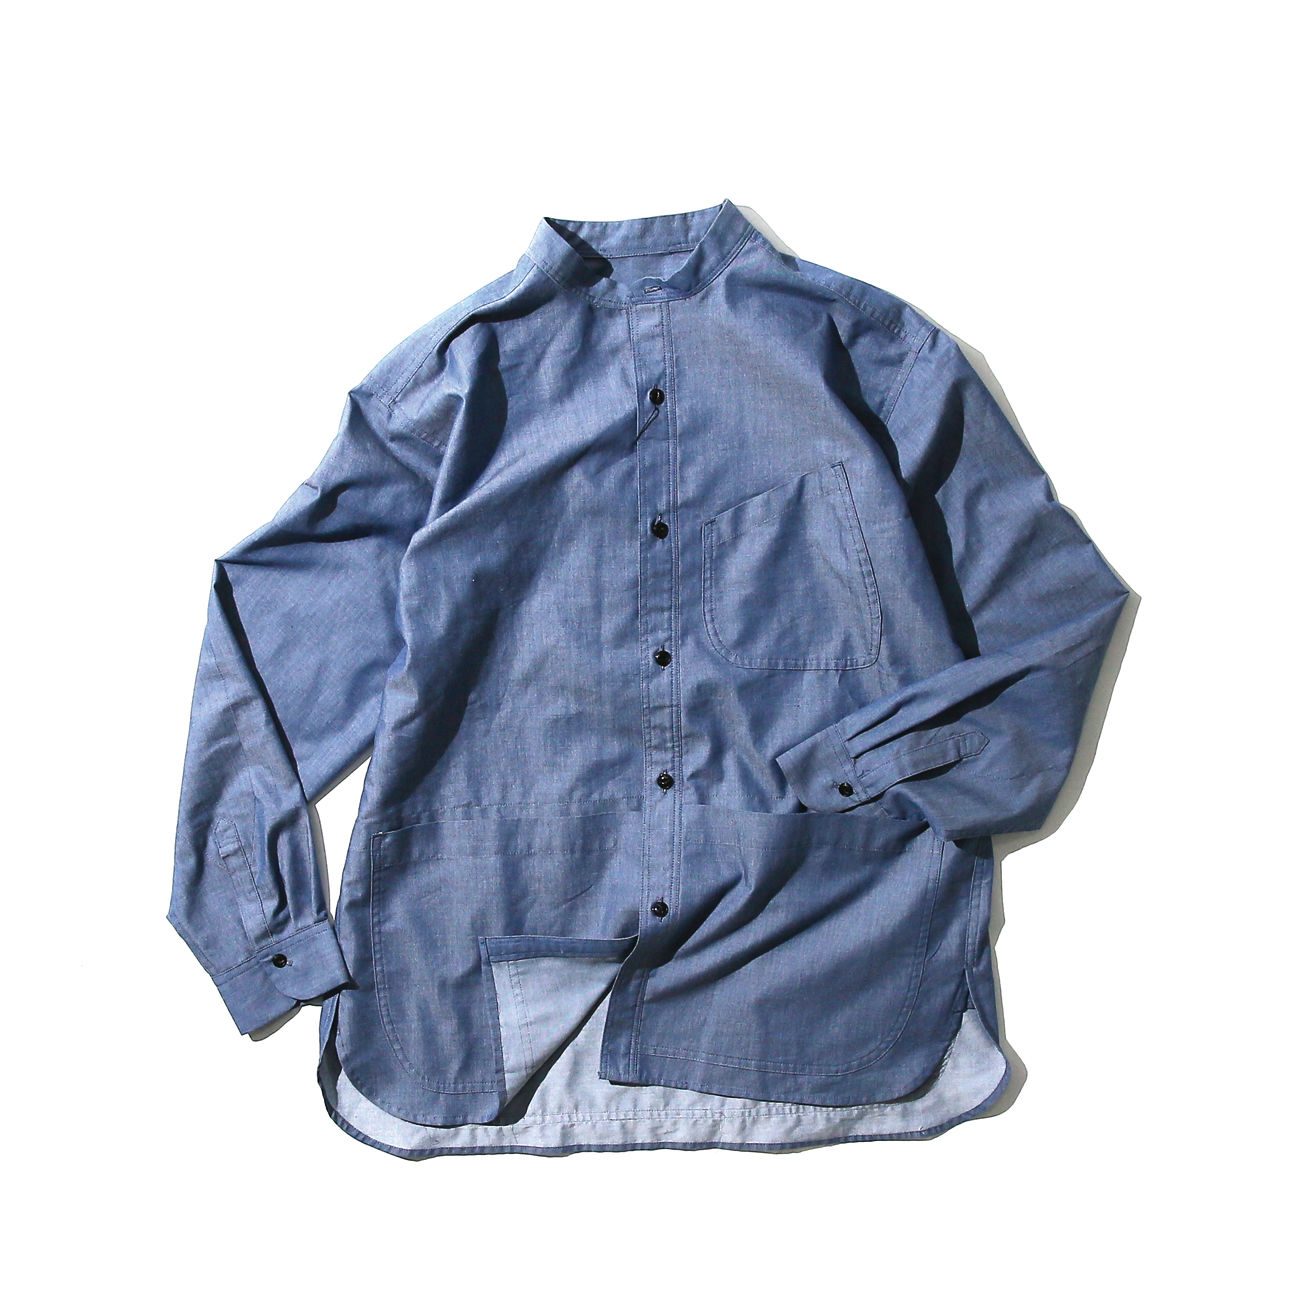 NORBIT HNSH-003 T/c Dungaree Shirts – WANDERS*